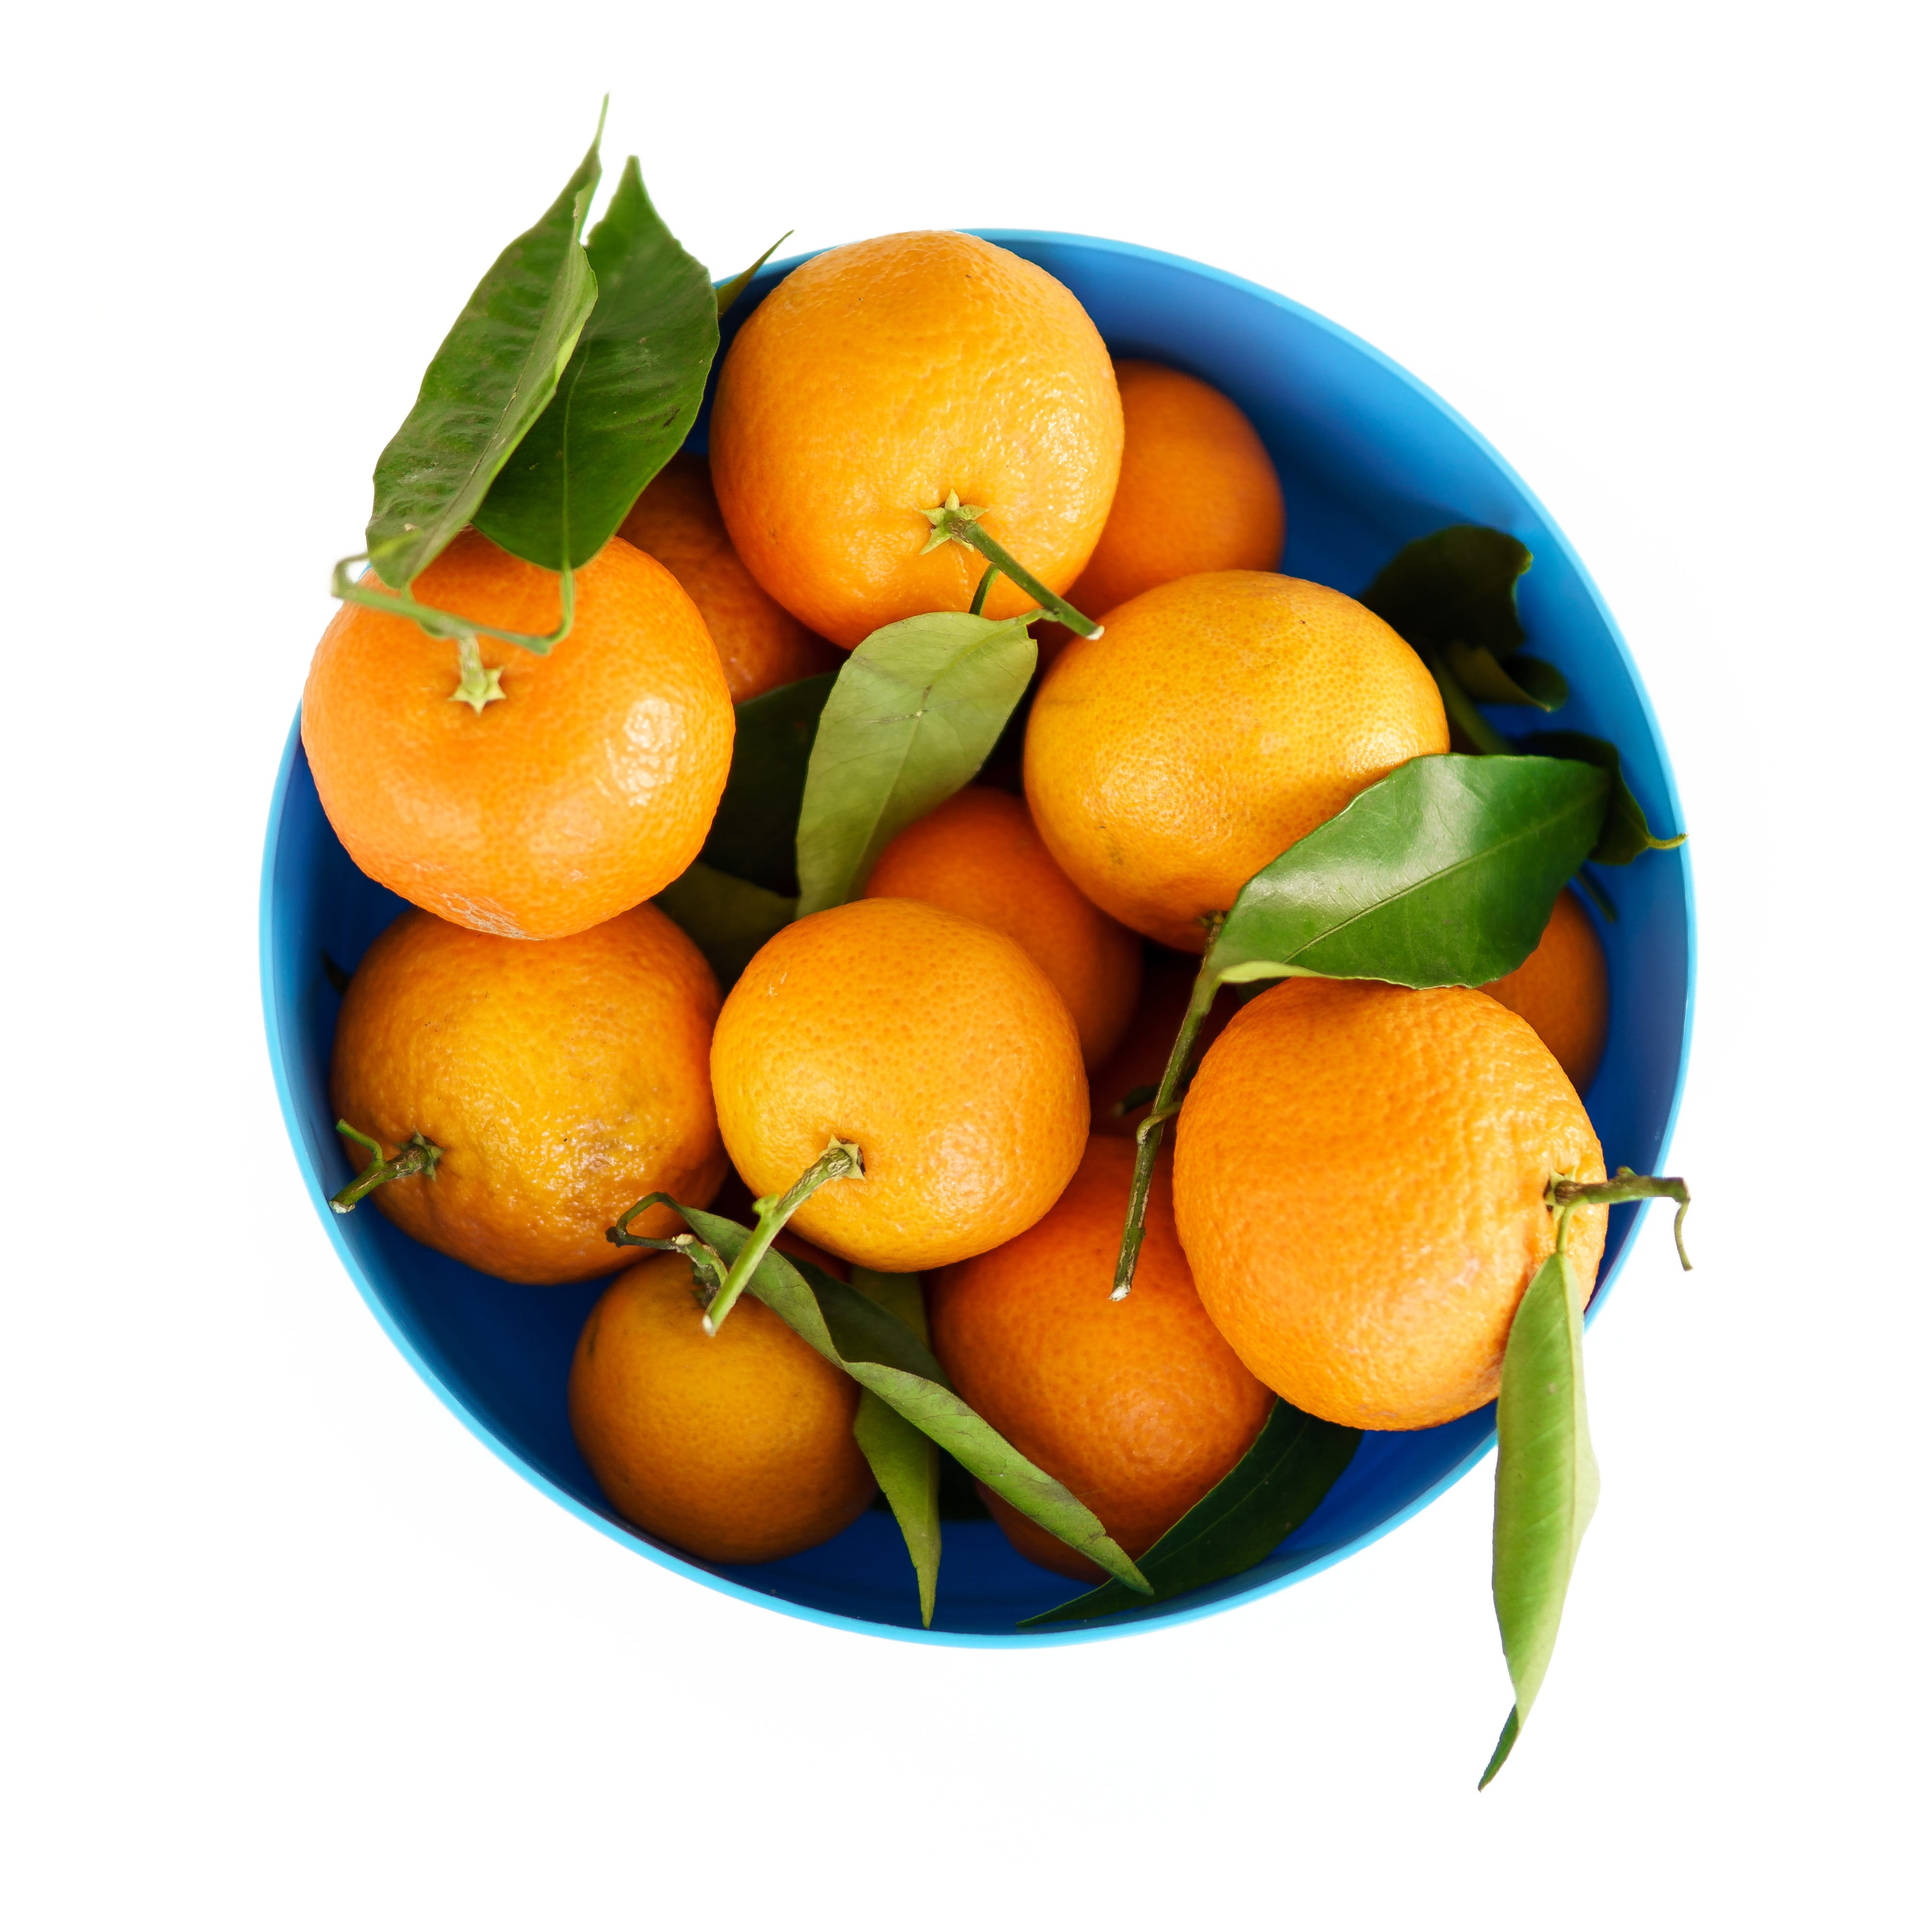 Clementinercitrusfrukter I Blå Skål. Wallpaper